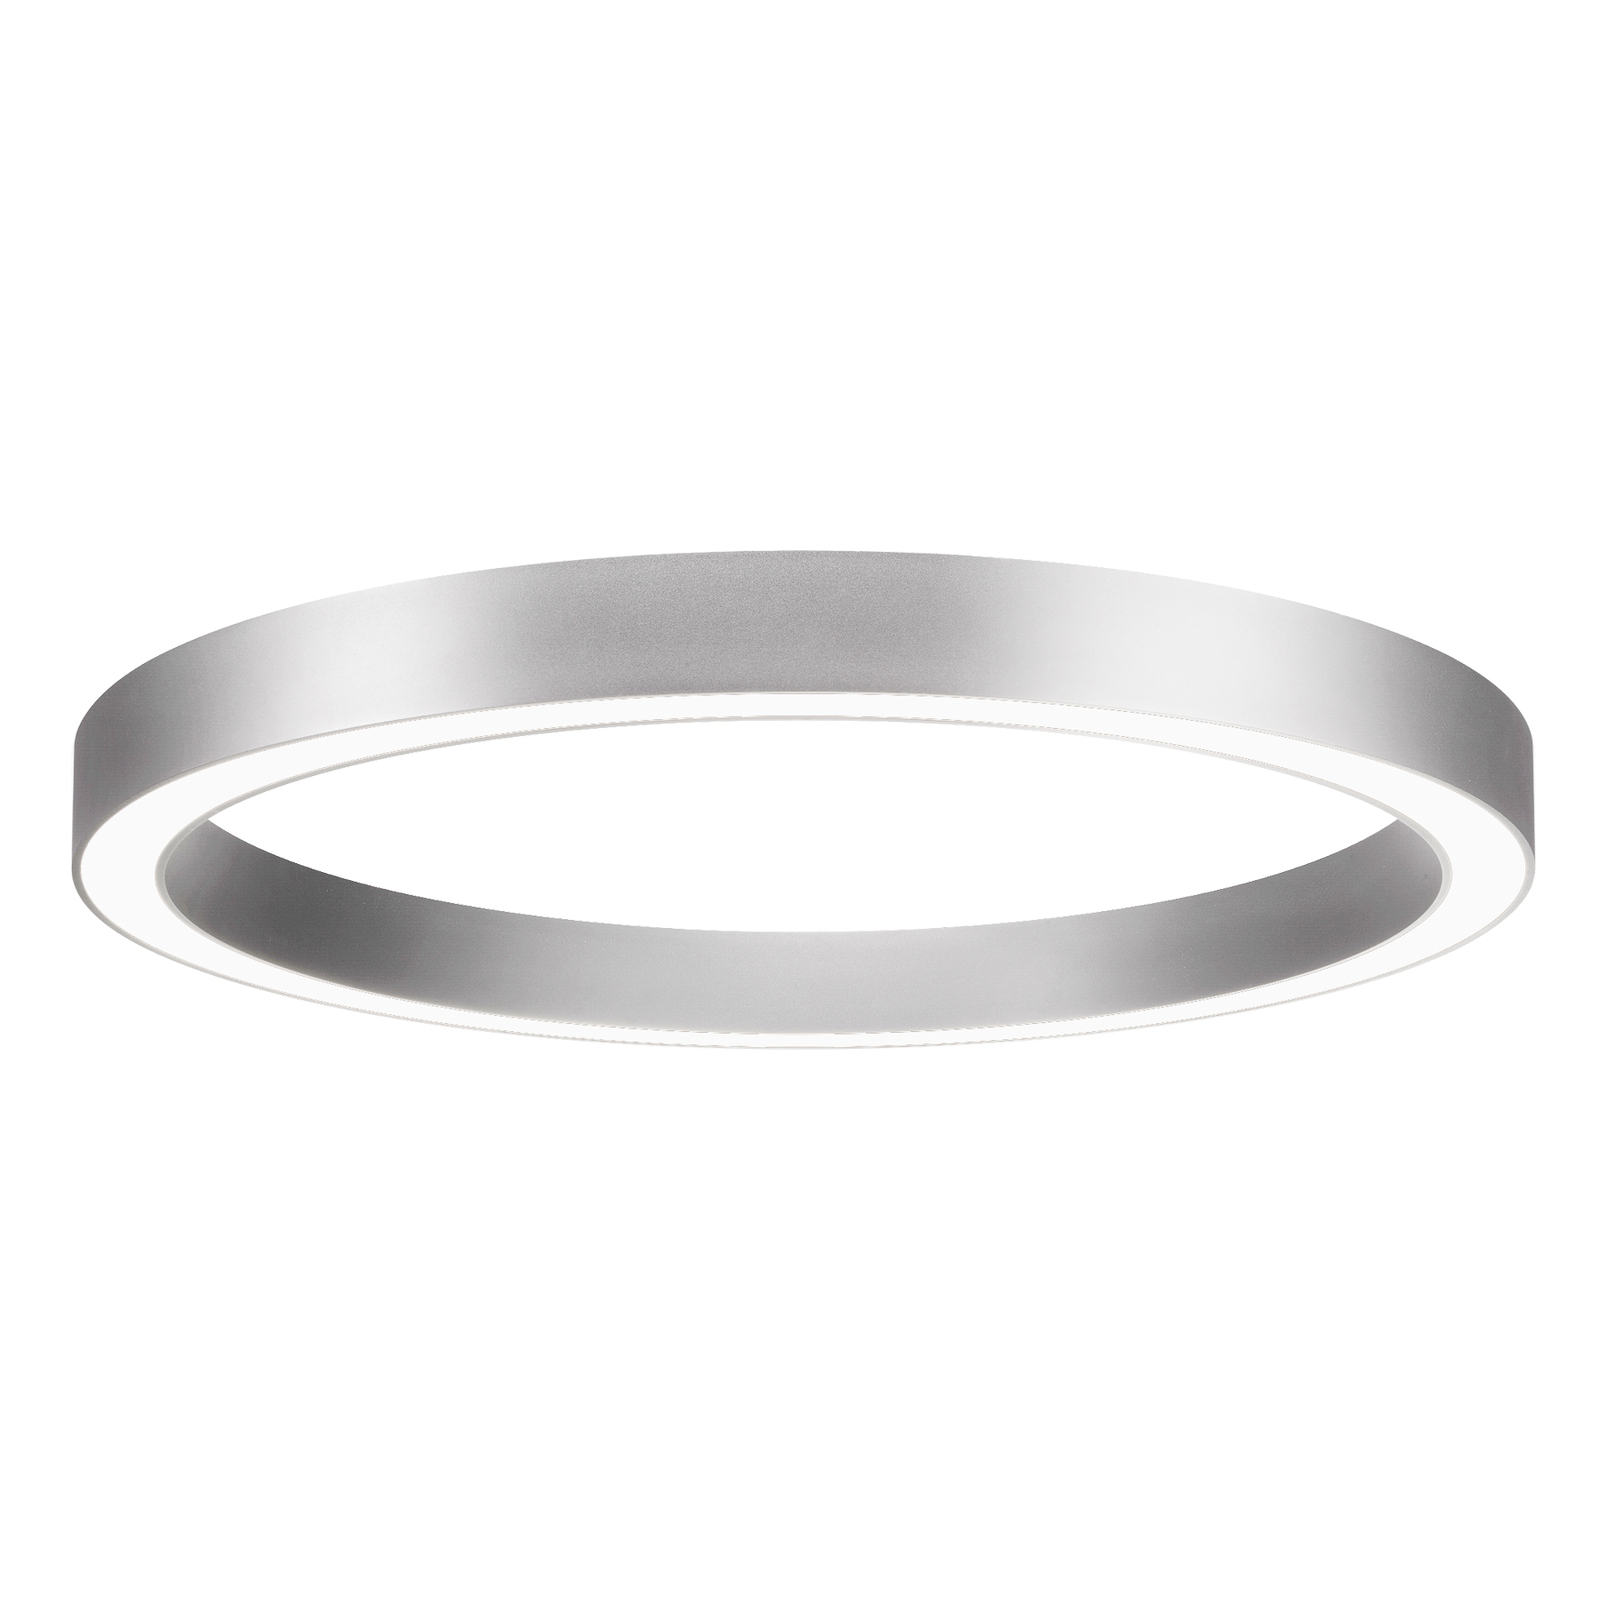 BRUMBERG Biro Circle Ring, Ø 45cm, on/off, silver, 4,000 K